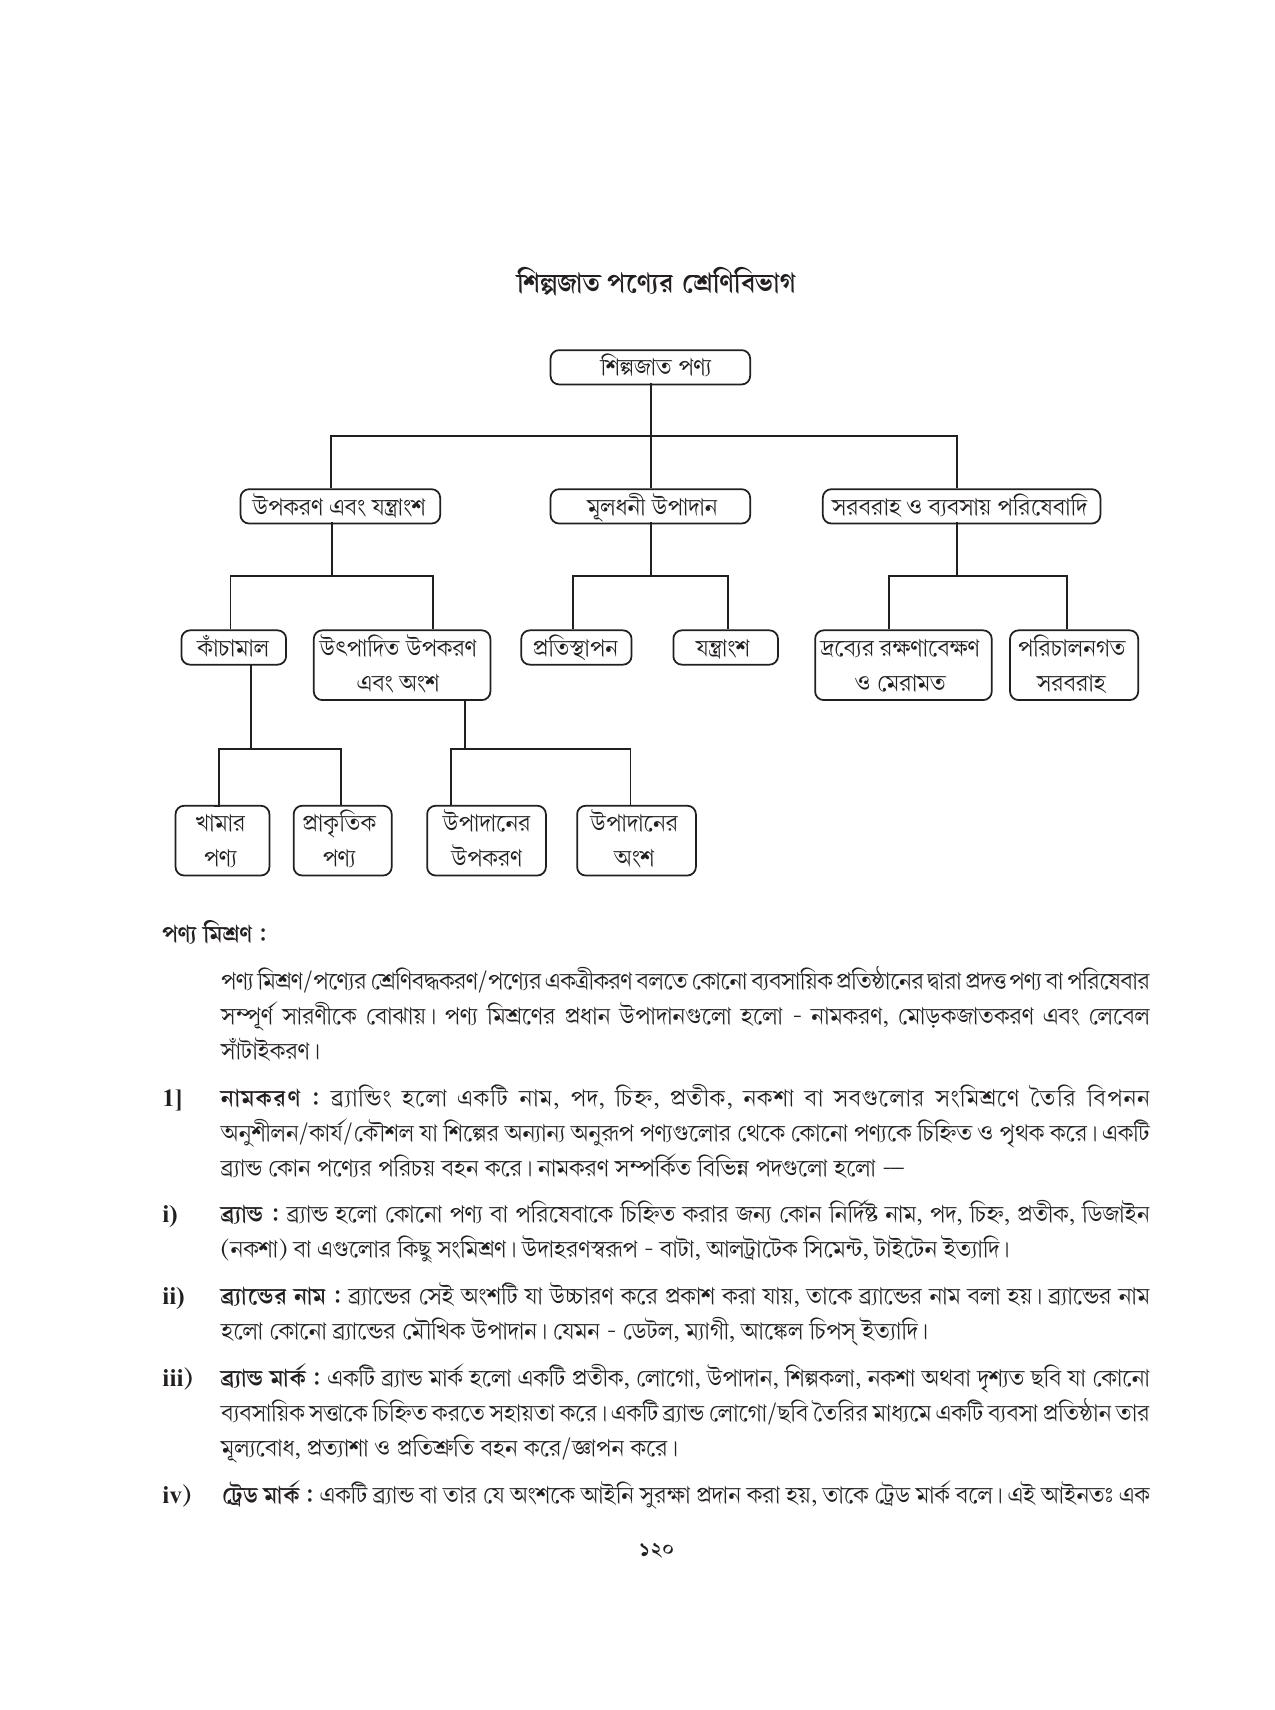 Tripura Board Class 12 Karbari Shastra Bengali Version Workbooks - Page 120